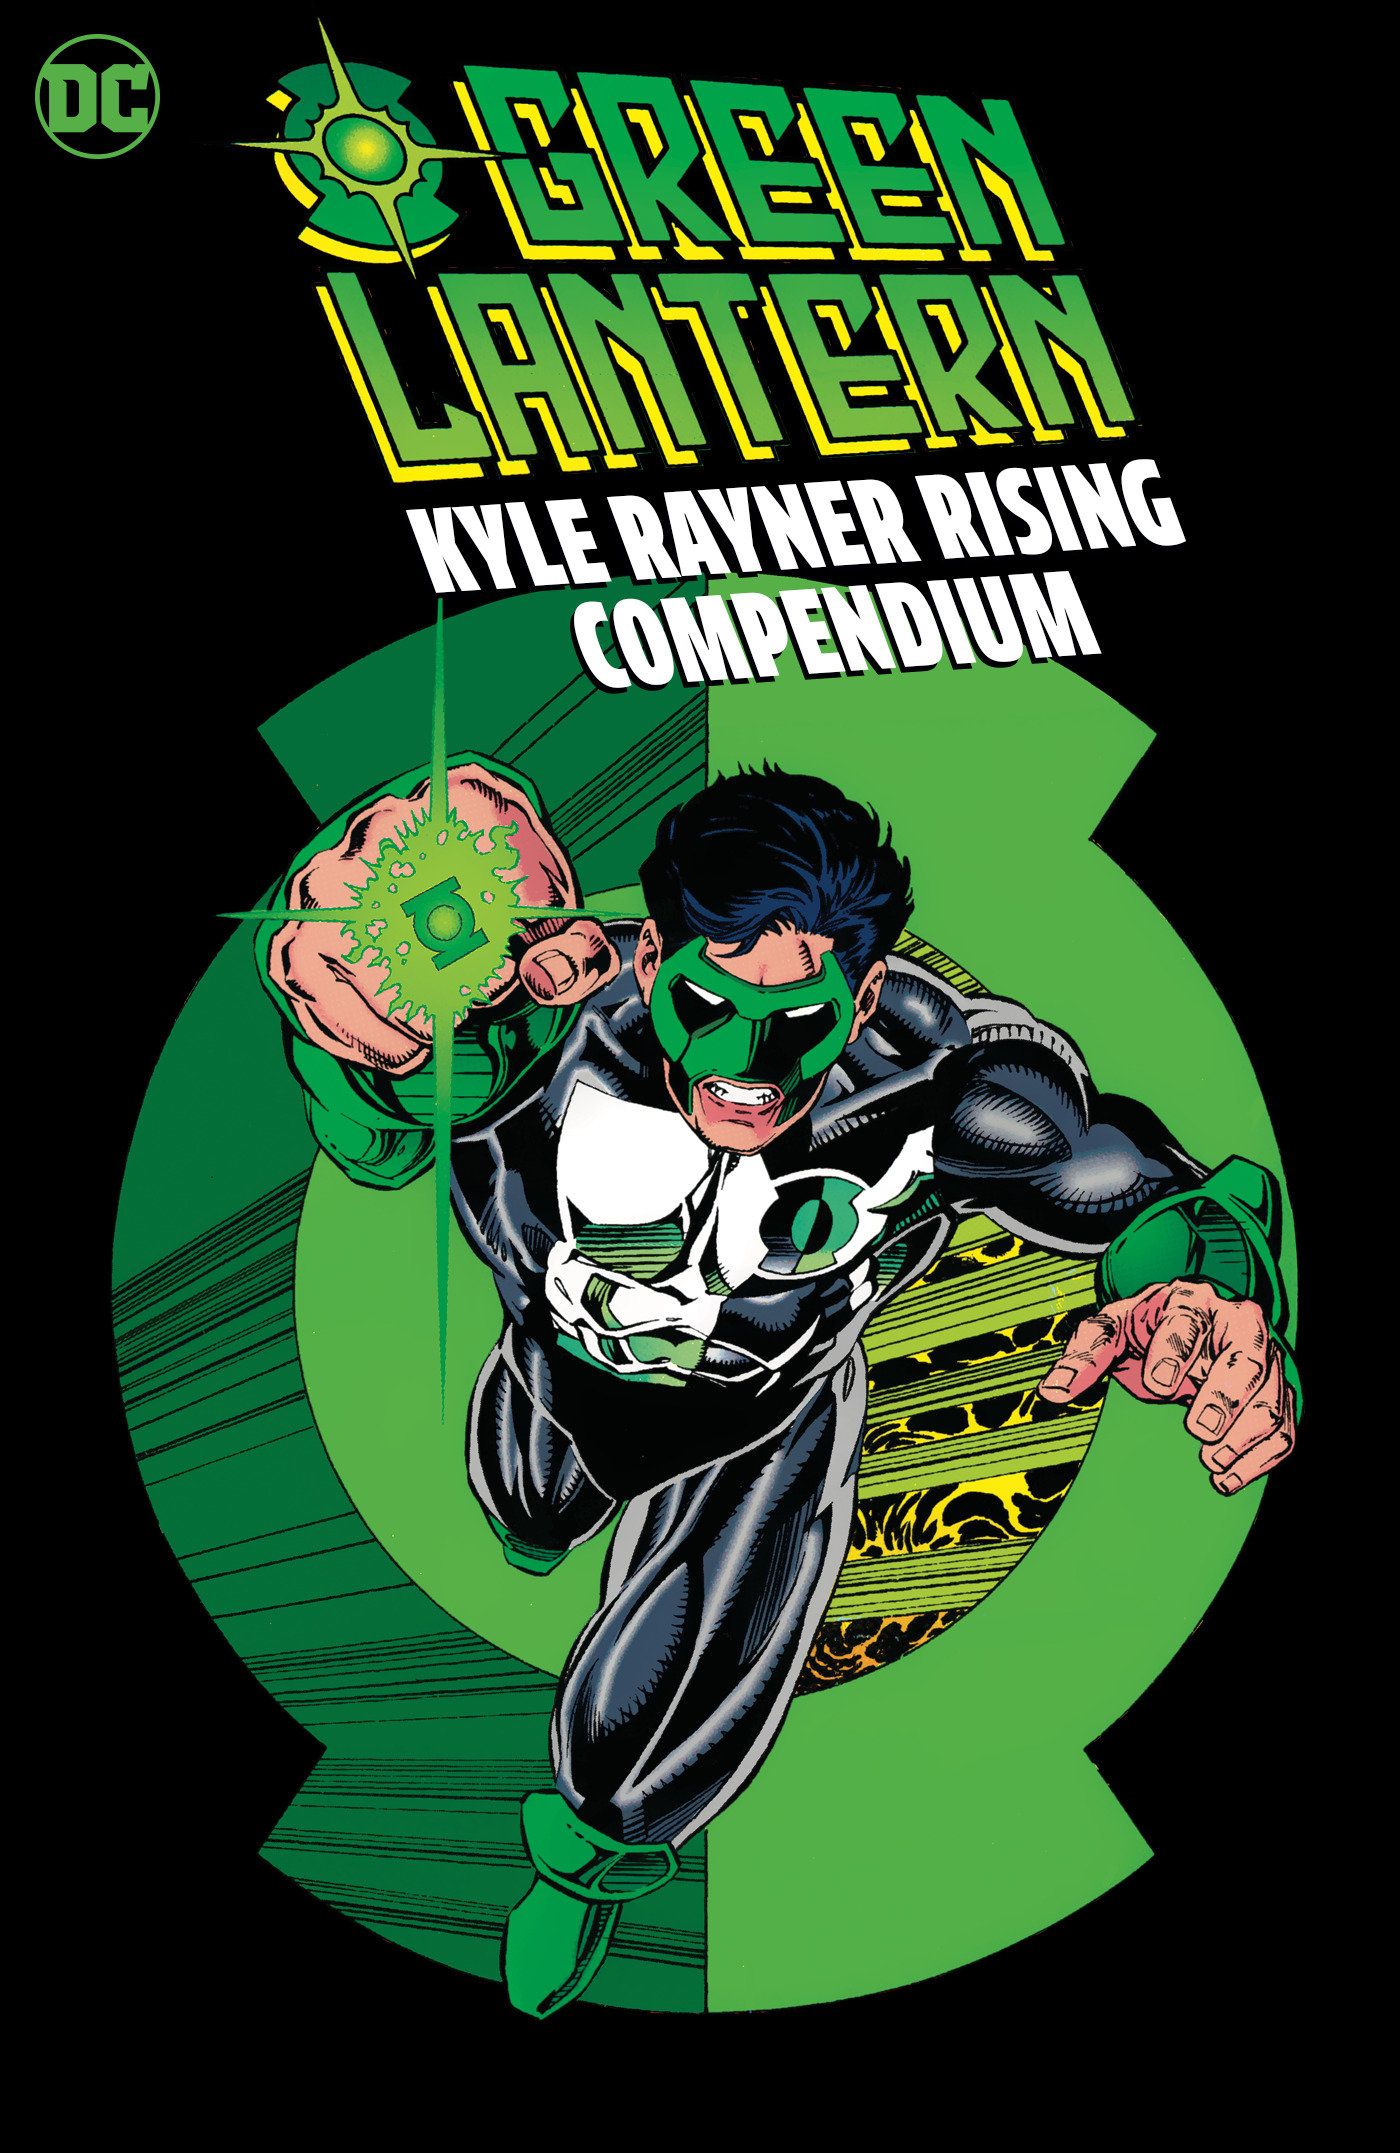 Green Lantern Kyle Rayner Rising Compendium Graphic Novel